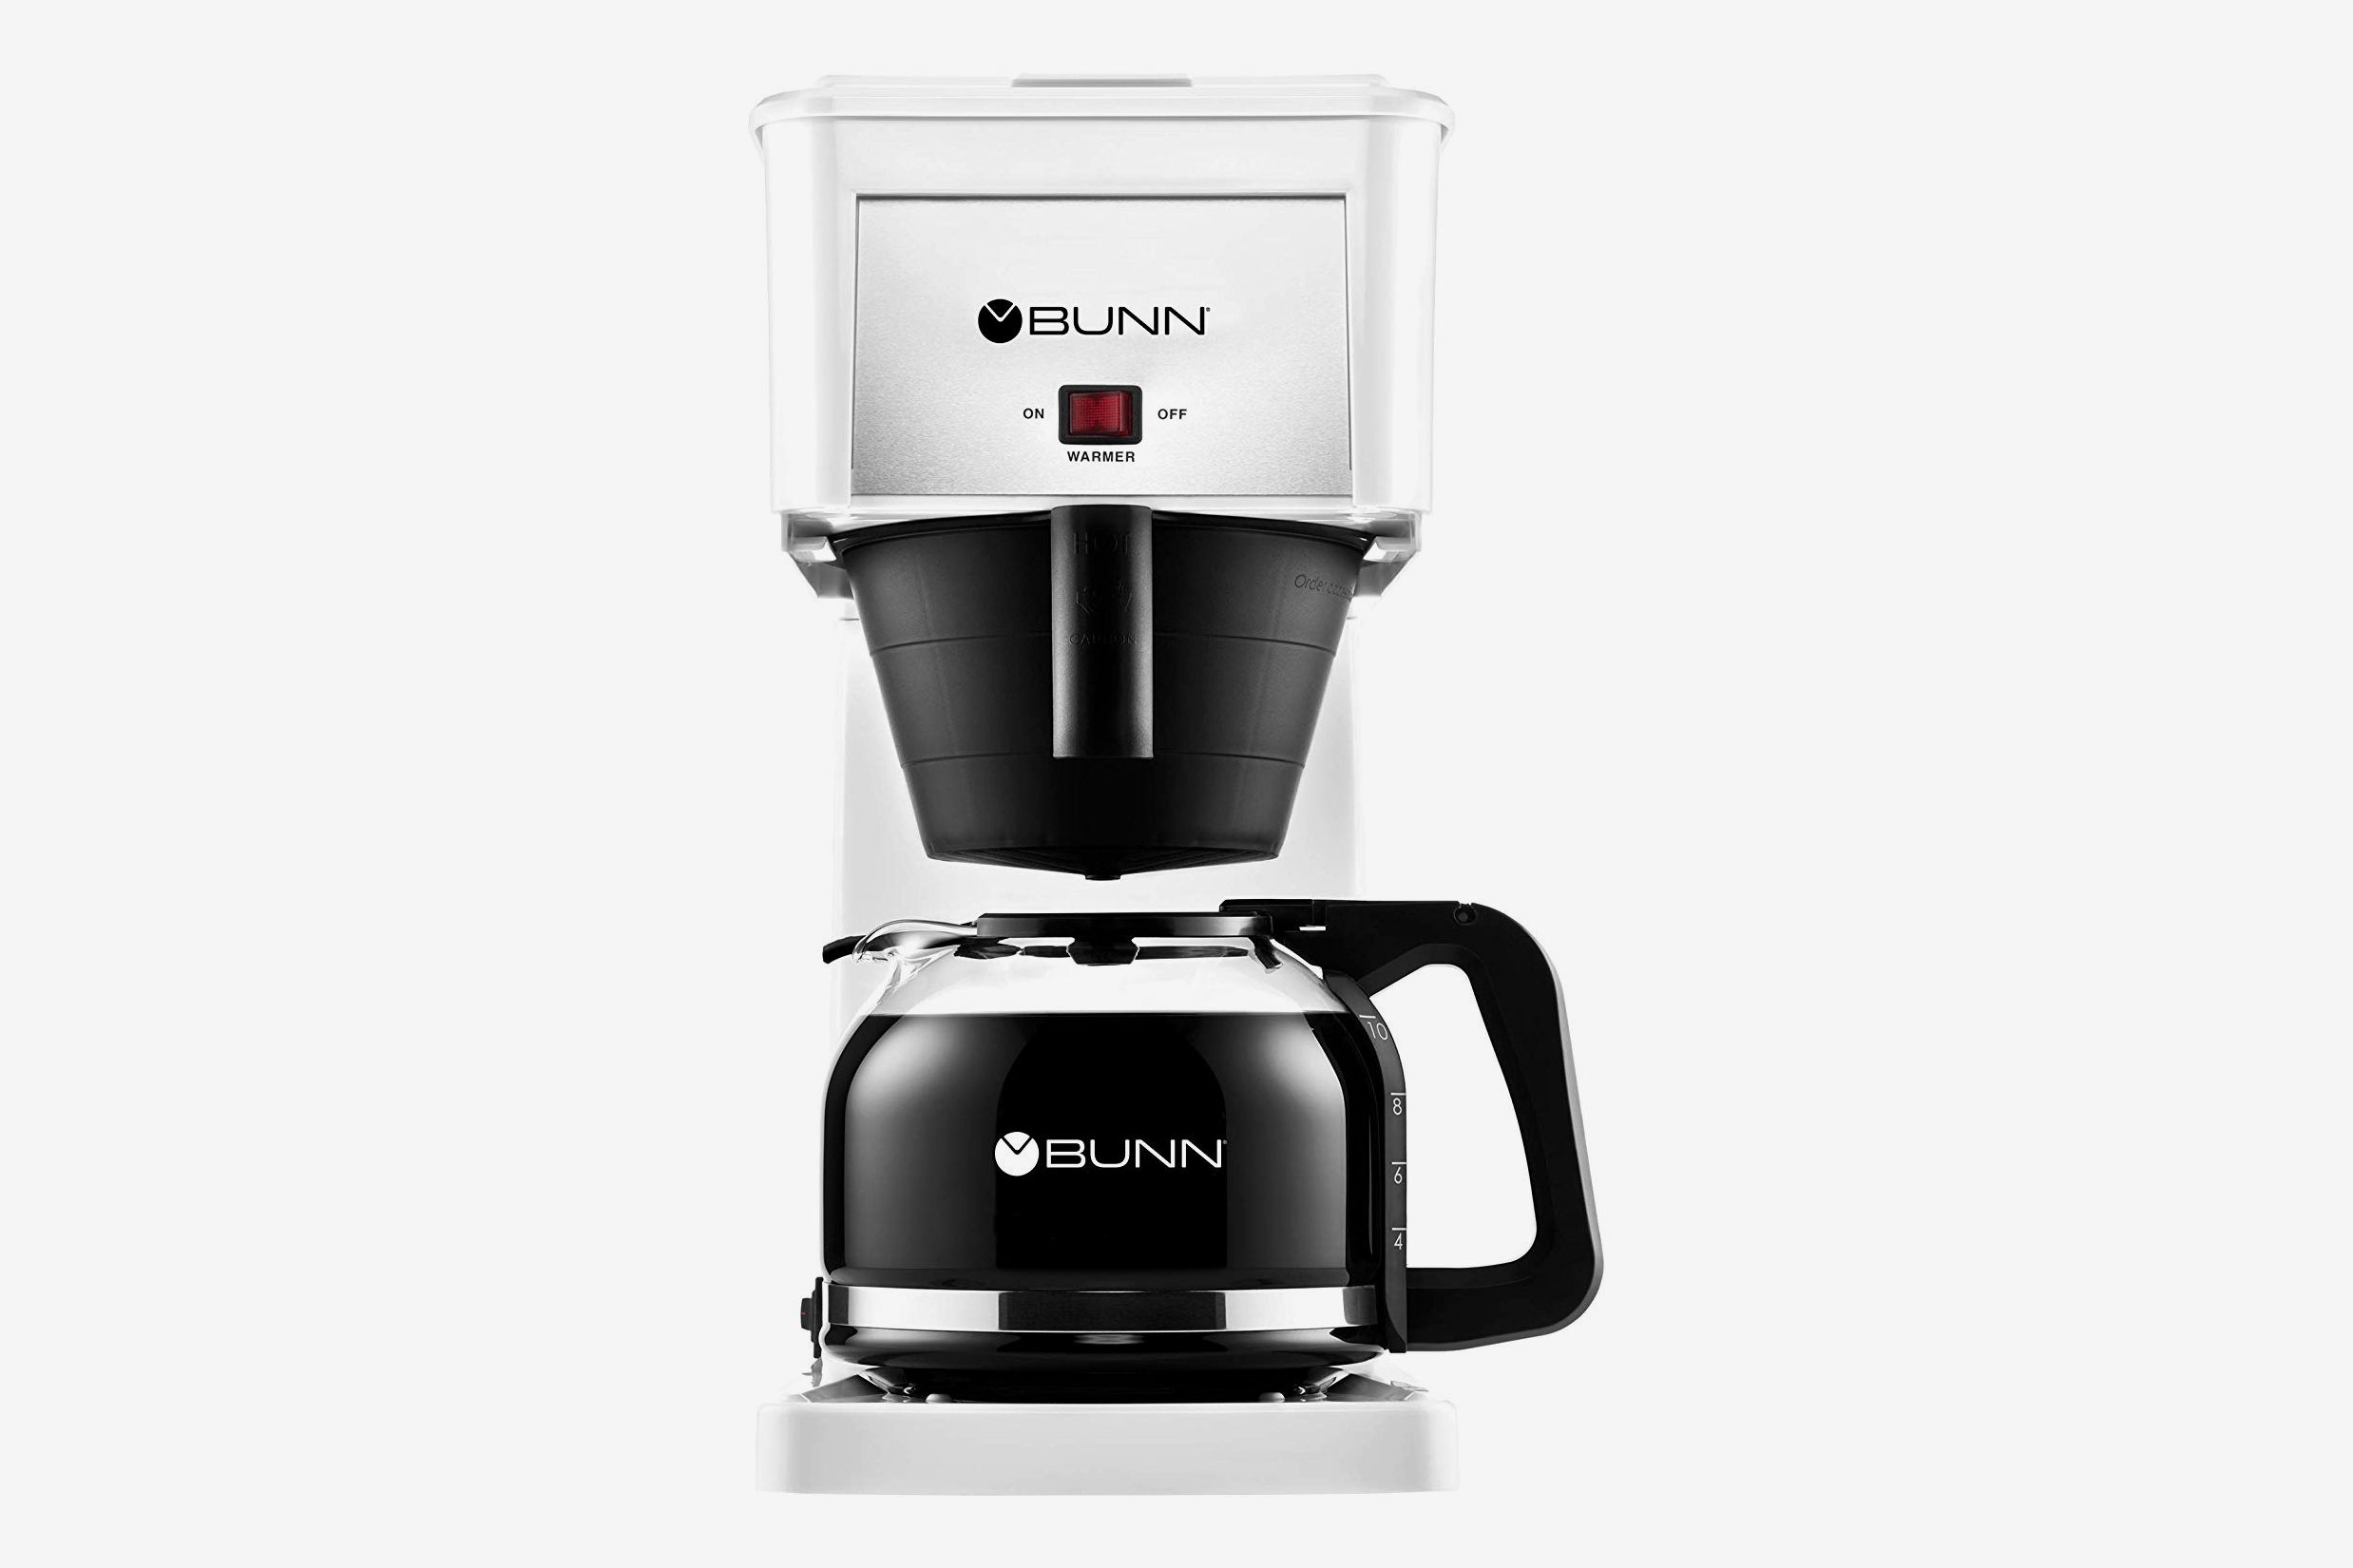 https://pyxis.nymag.com/v1/imgs/39f/79e/ab24a18dd5d5bf26310195da8fa0000874-burr-speed-coffee-maker.jpg